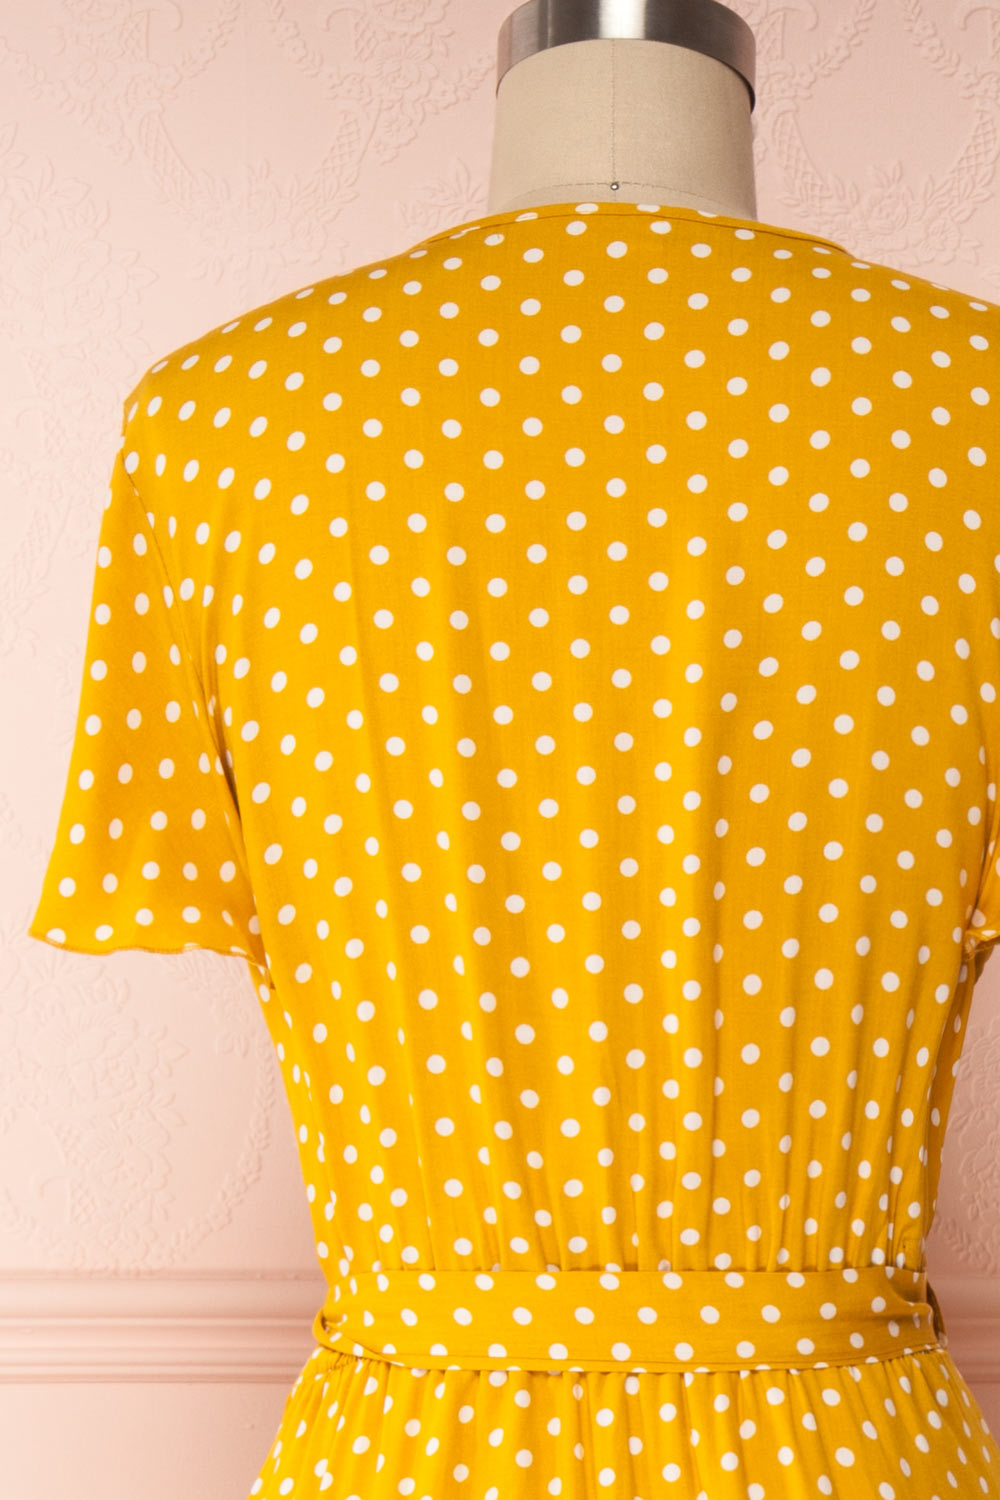 Millicent Yellow & White Polka Dot Dress | Boutique 1861 back view